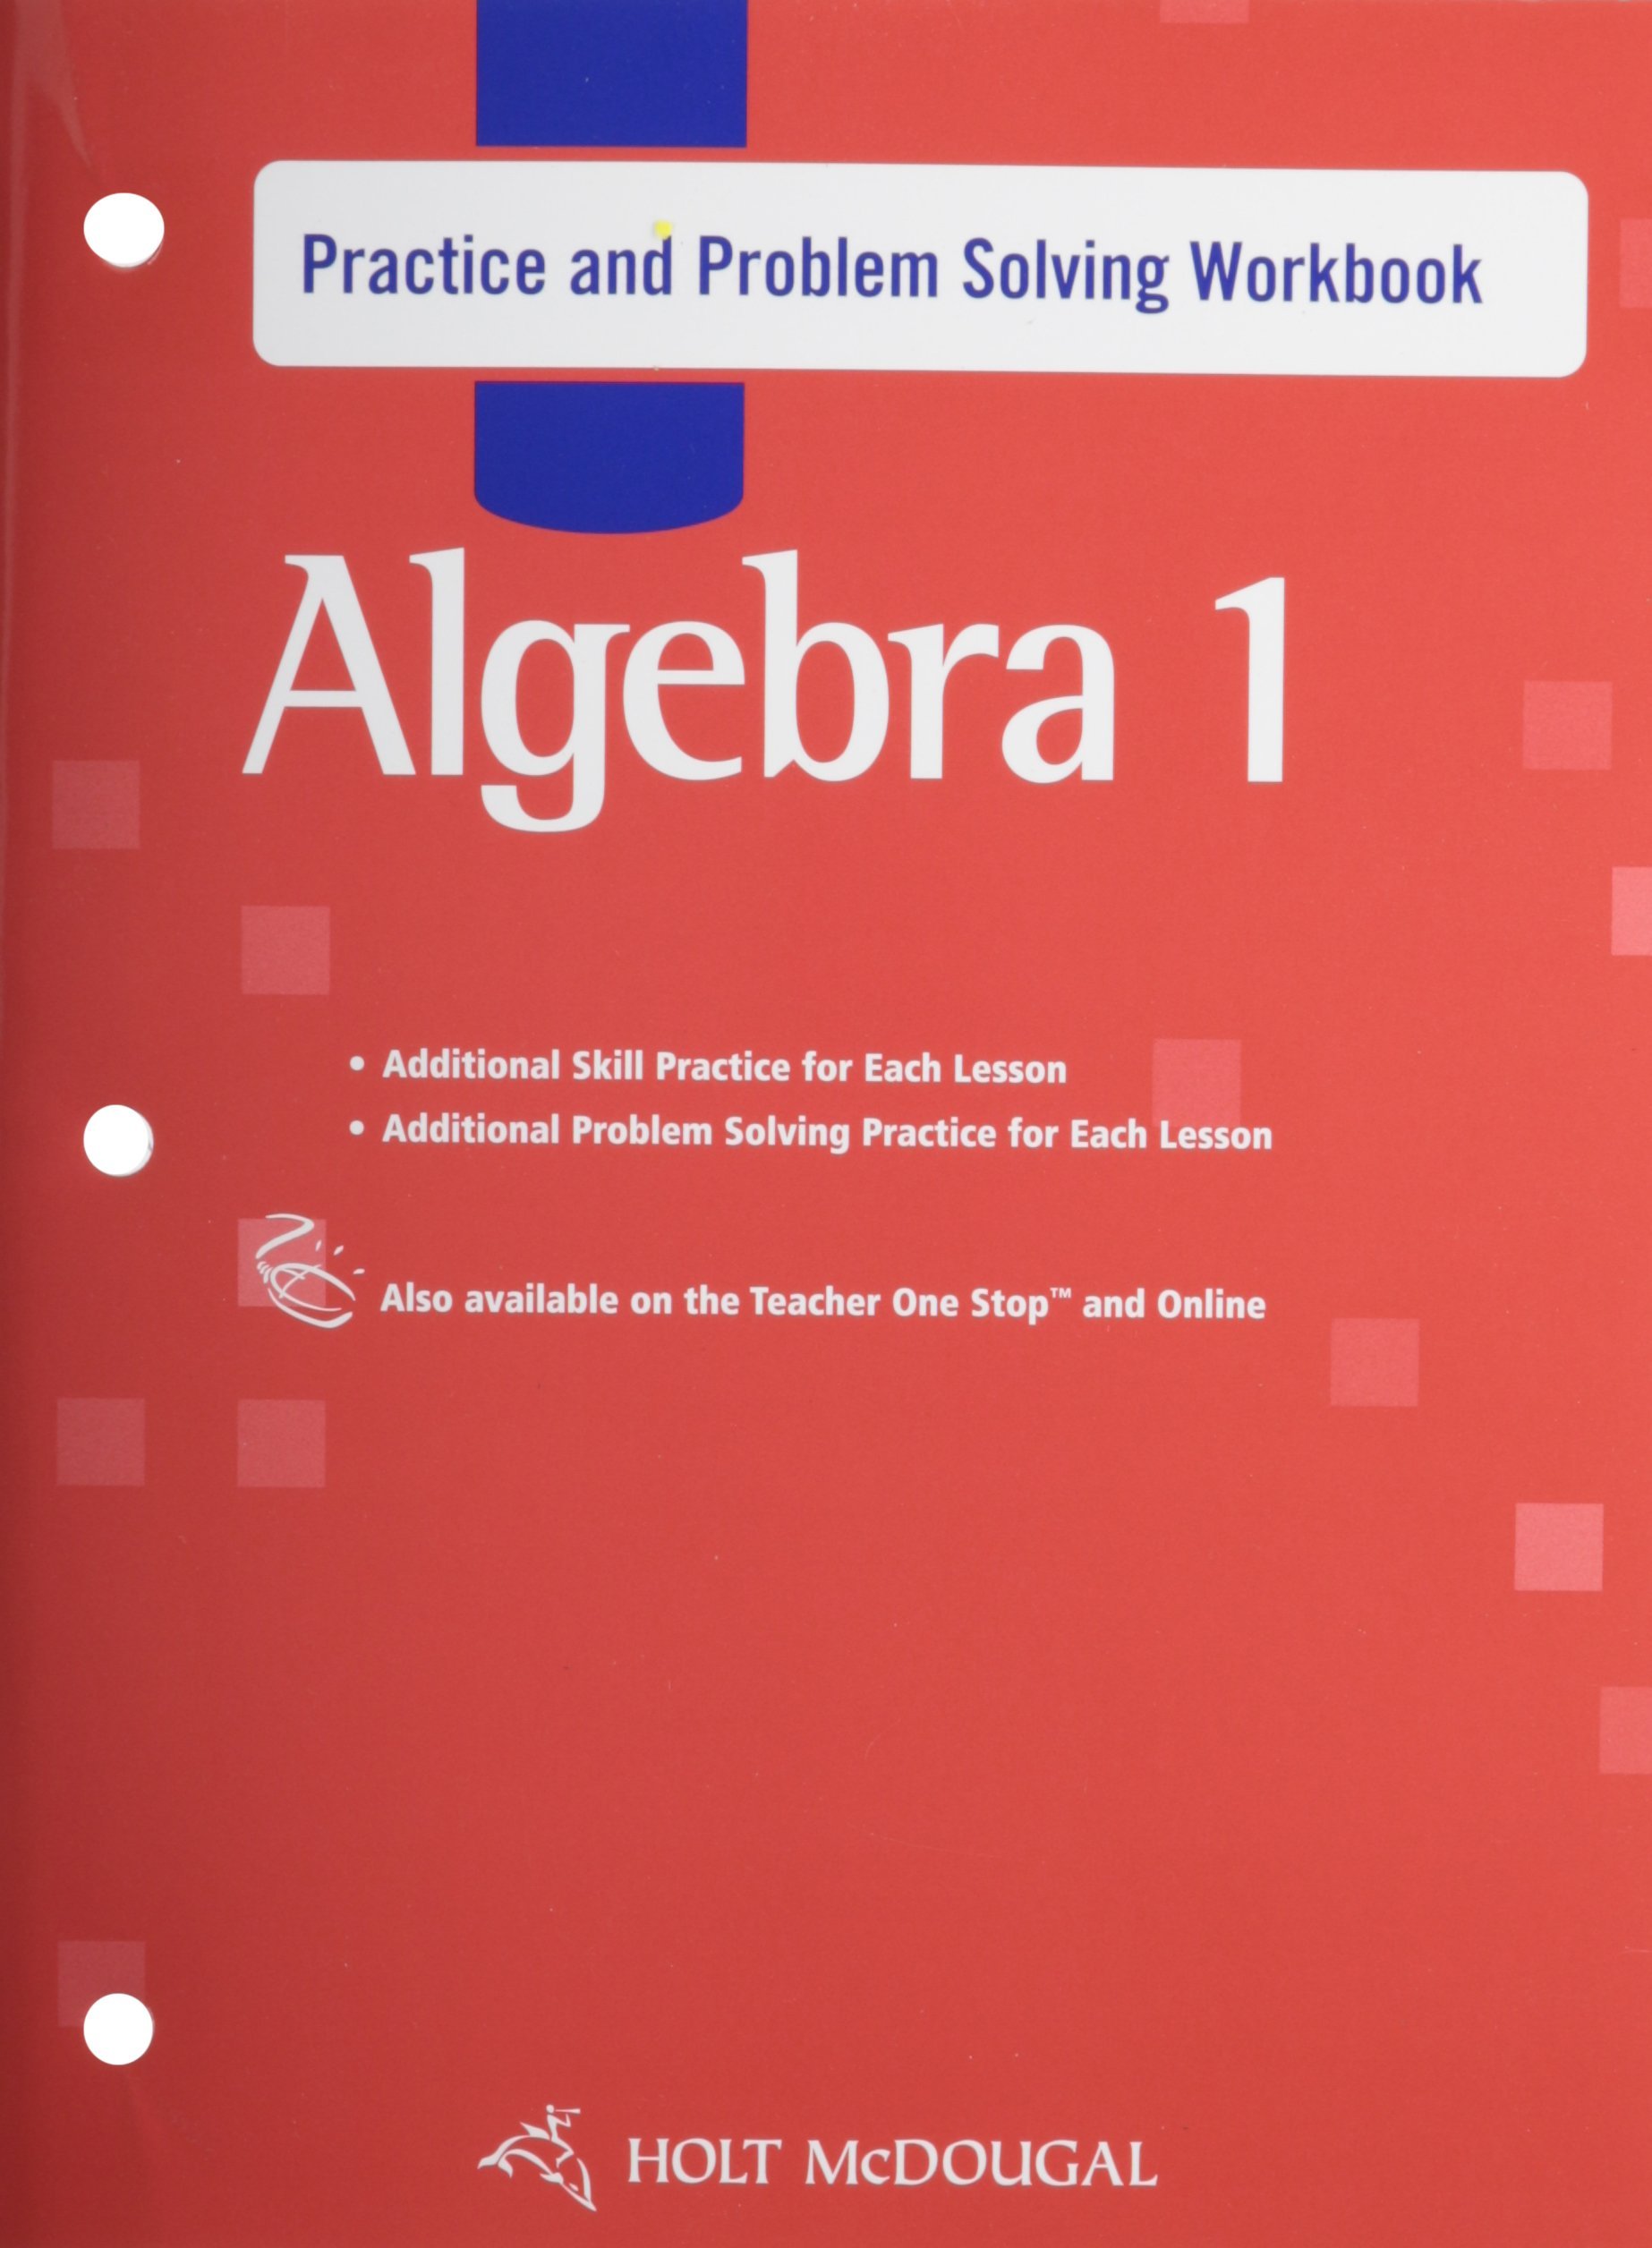 Holt algebra 1 textbook answer key, akzamkowy.org